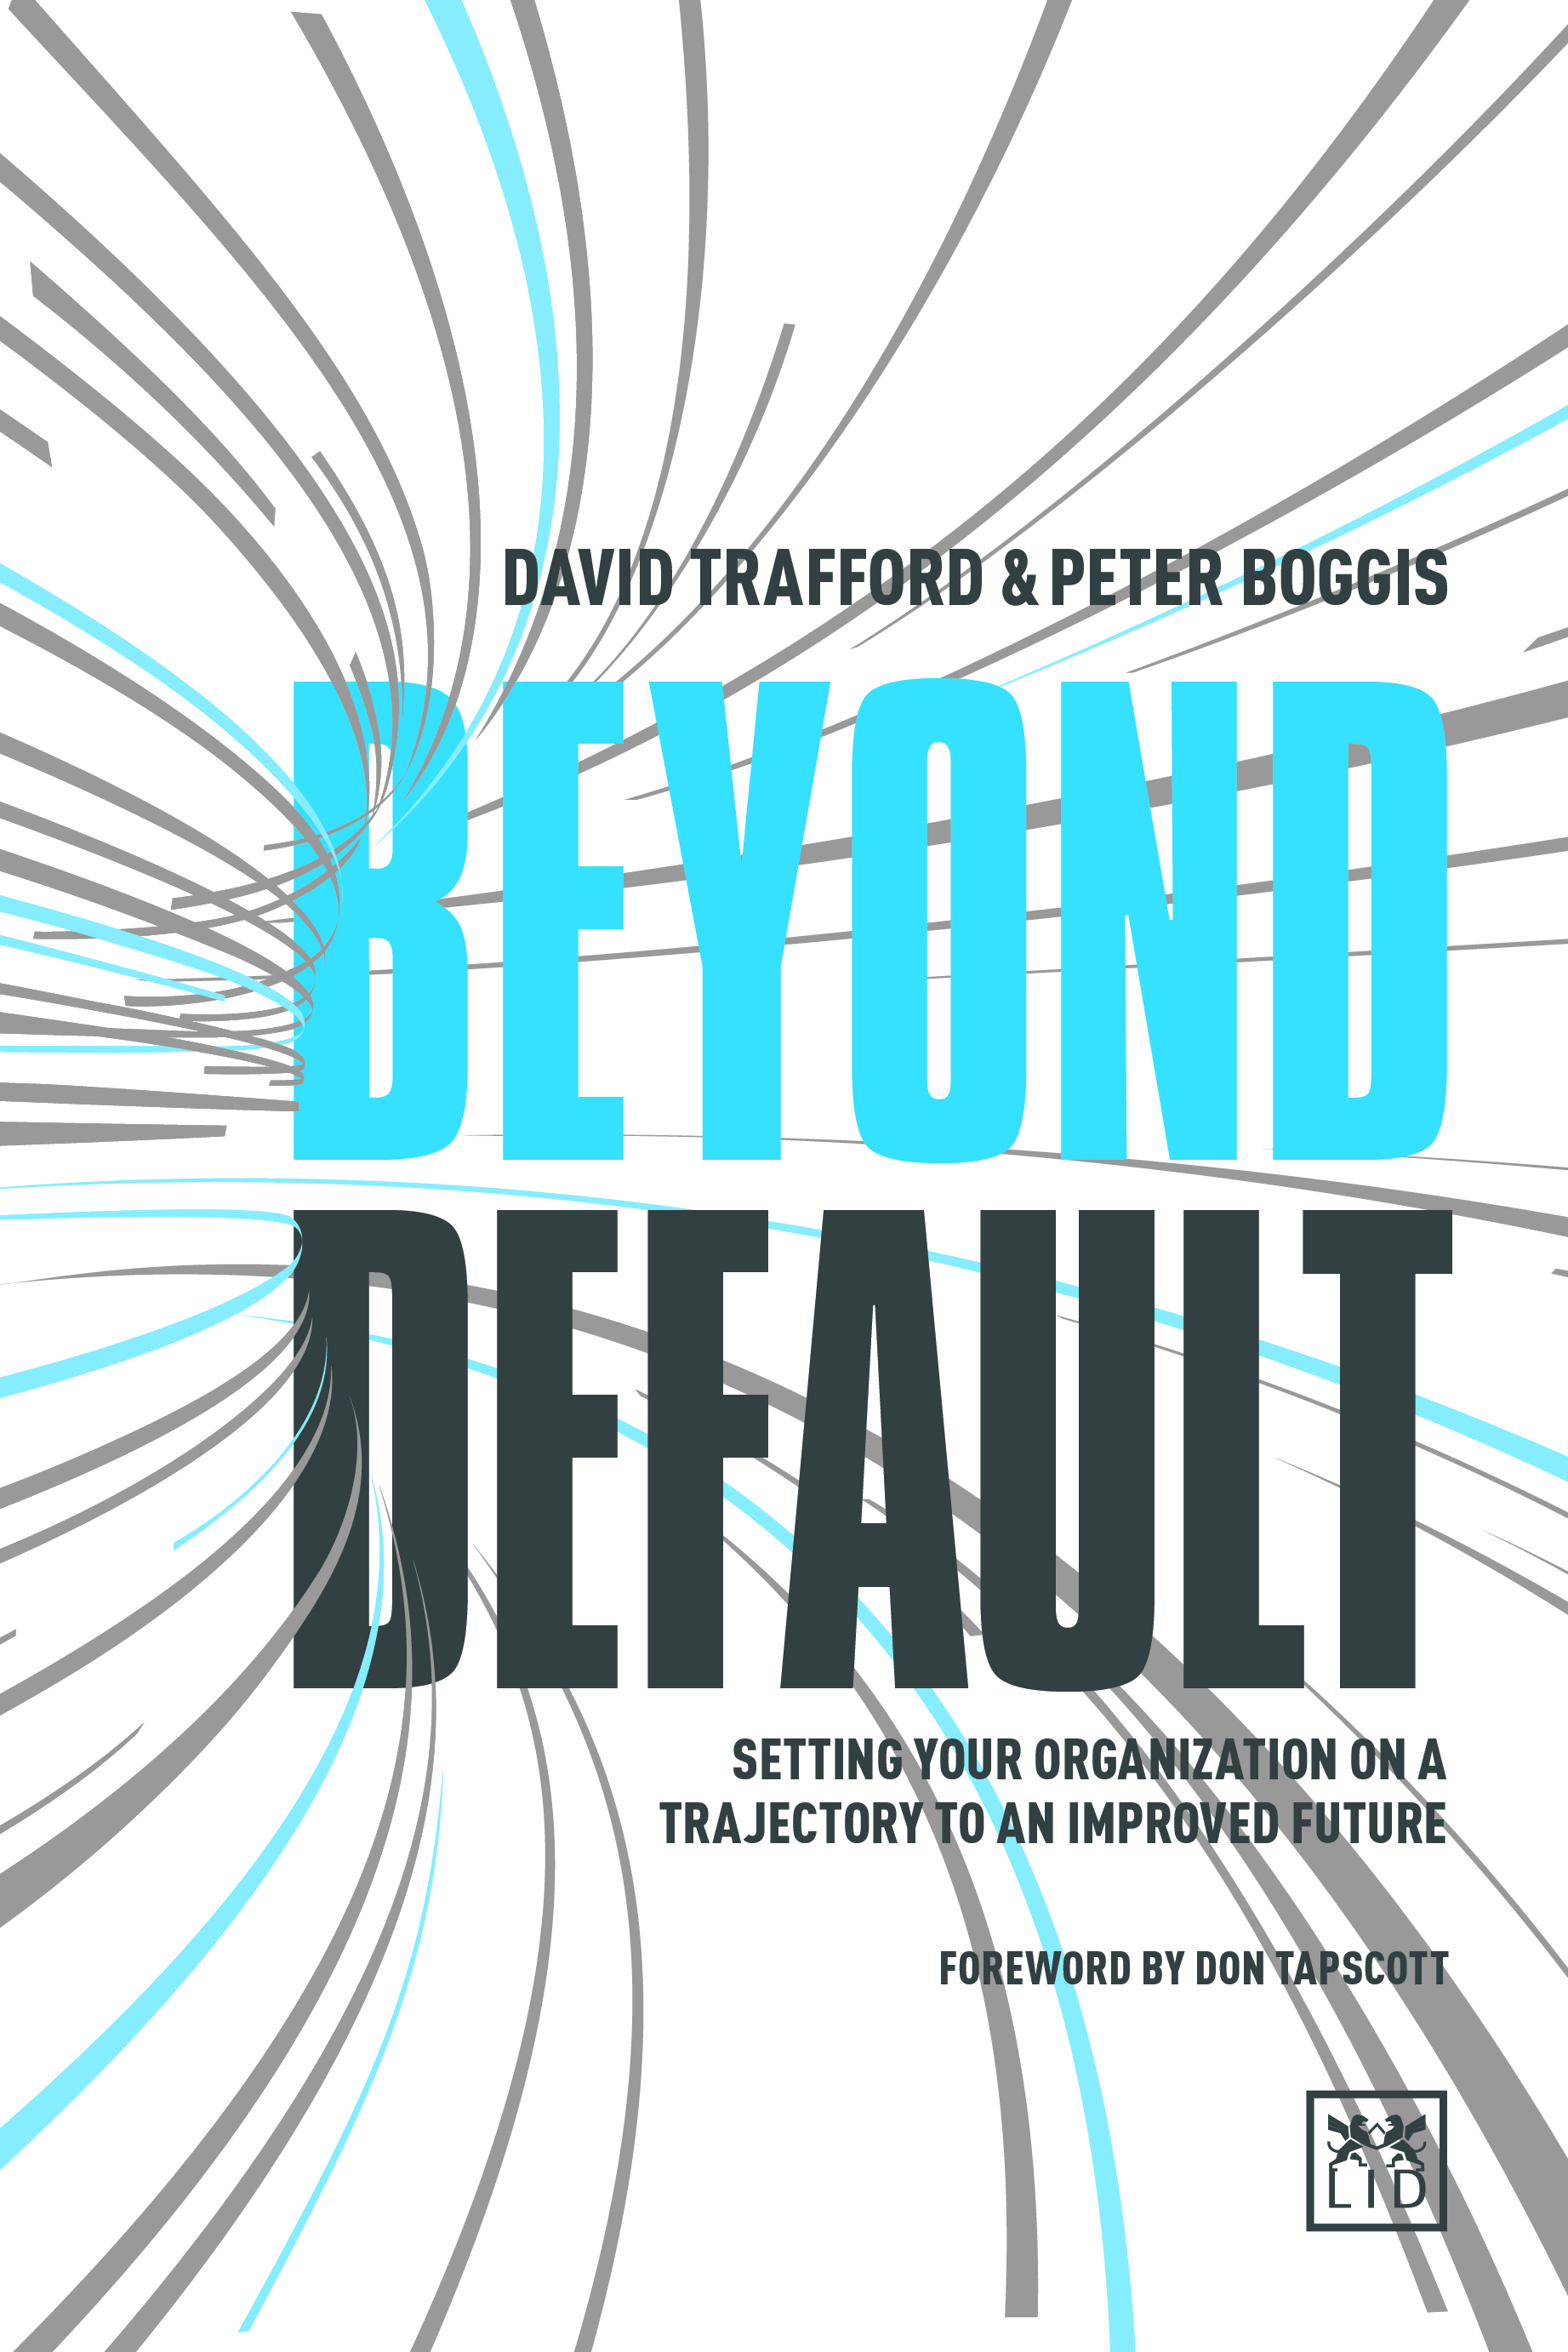 "Beyond Default" by David Trafford & Peter Boggis